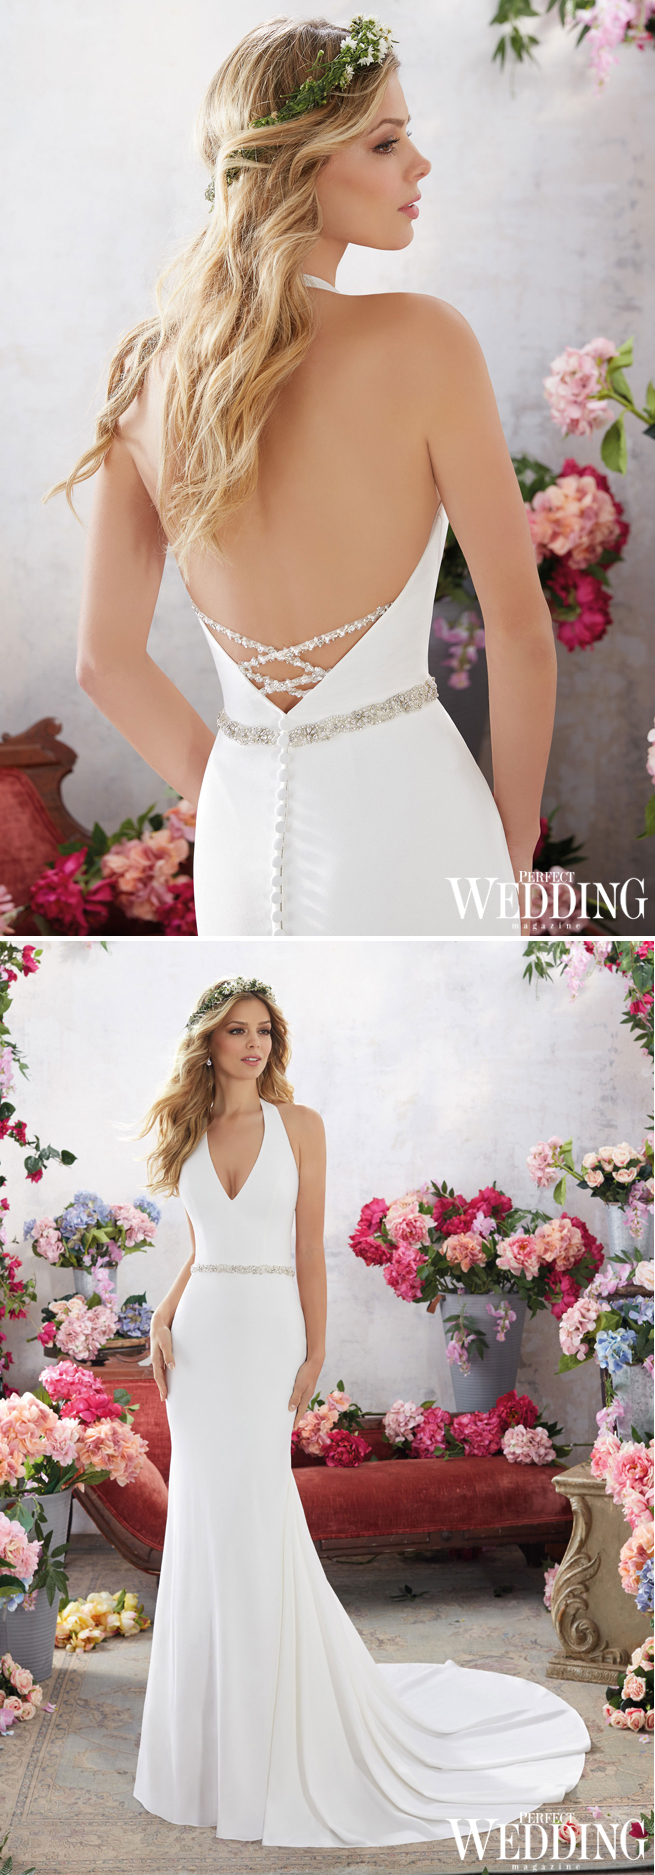 Morilee by Madeline Gardner, Wedding Gowns, Destination Wedding Gowns, Voyage, Perfect Wedding Magazine, Perfect Wedding Blog, Bridal Trend